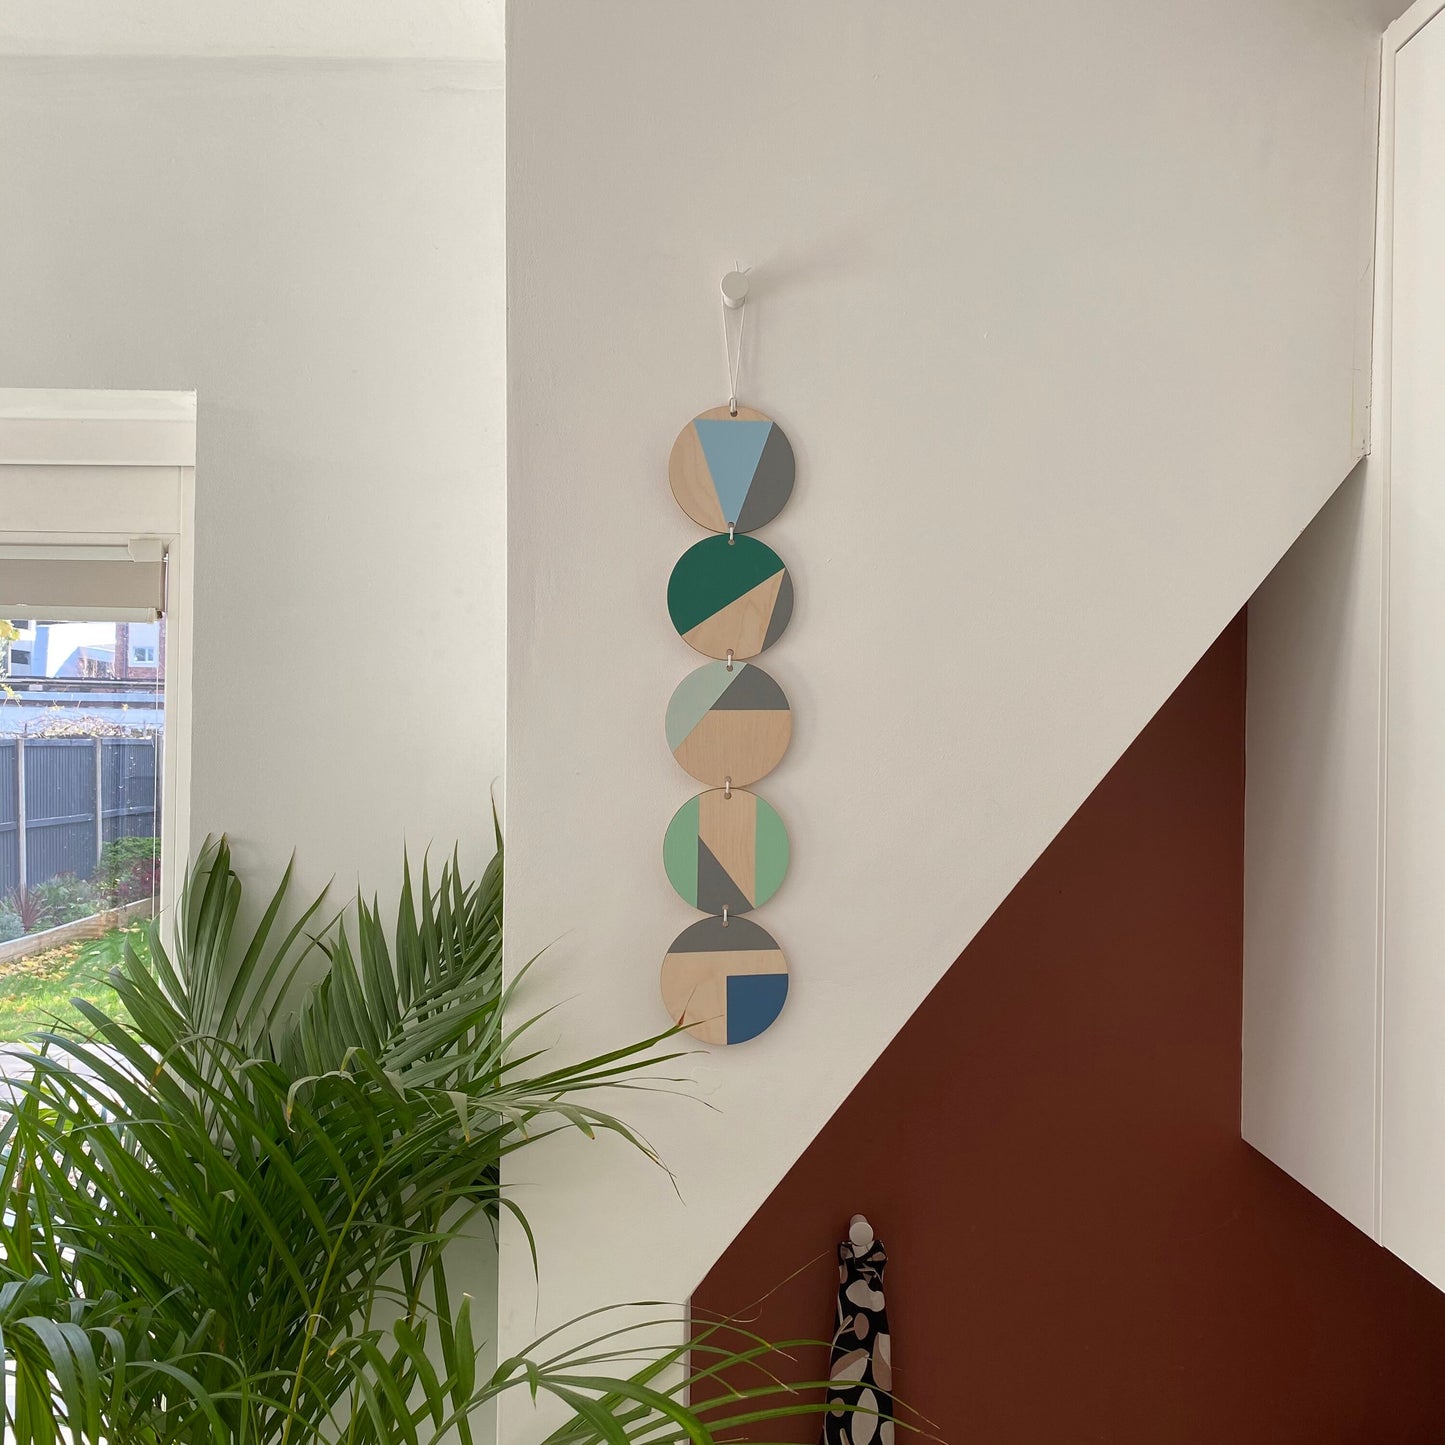 Wall hanging - Colourful Geometric Art - Plywood Decor - Scandi Hygge Boho - Wall Hanging - Wall Art multi - Green and Blues